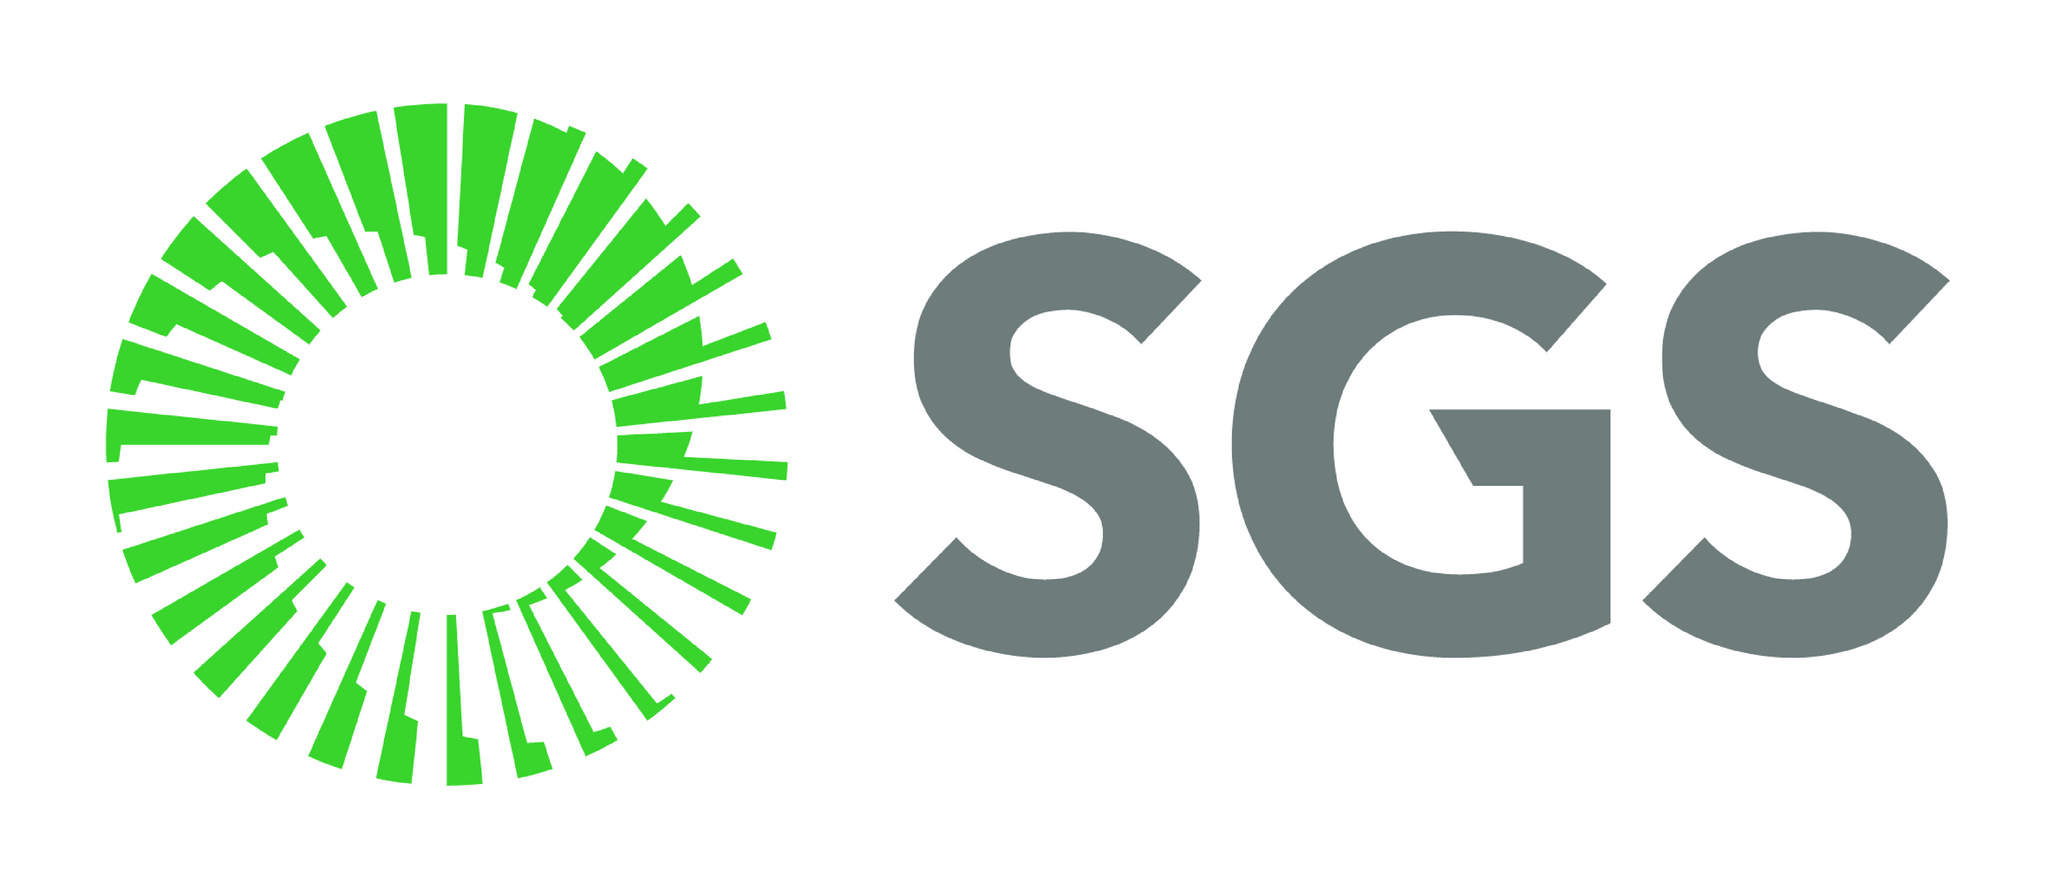 Sgs limited. SGS знак. Логотип СЖС. SGS Vostok Limited логотип. SGS картинки.